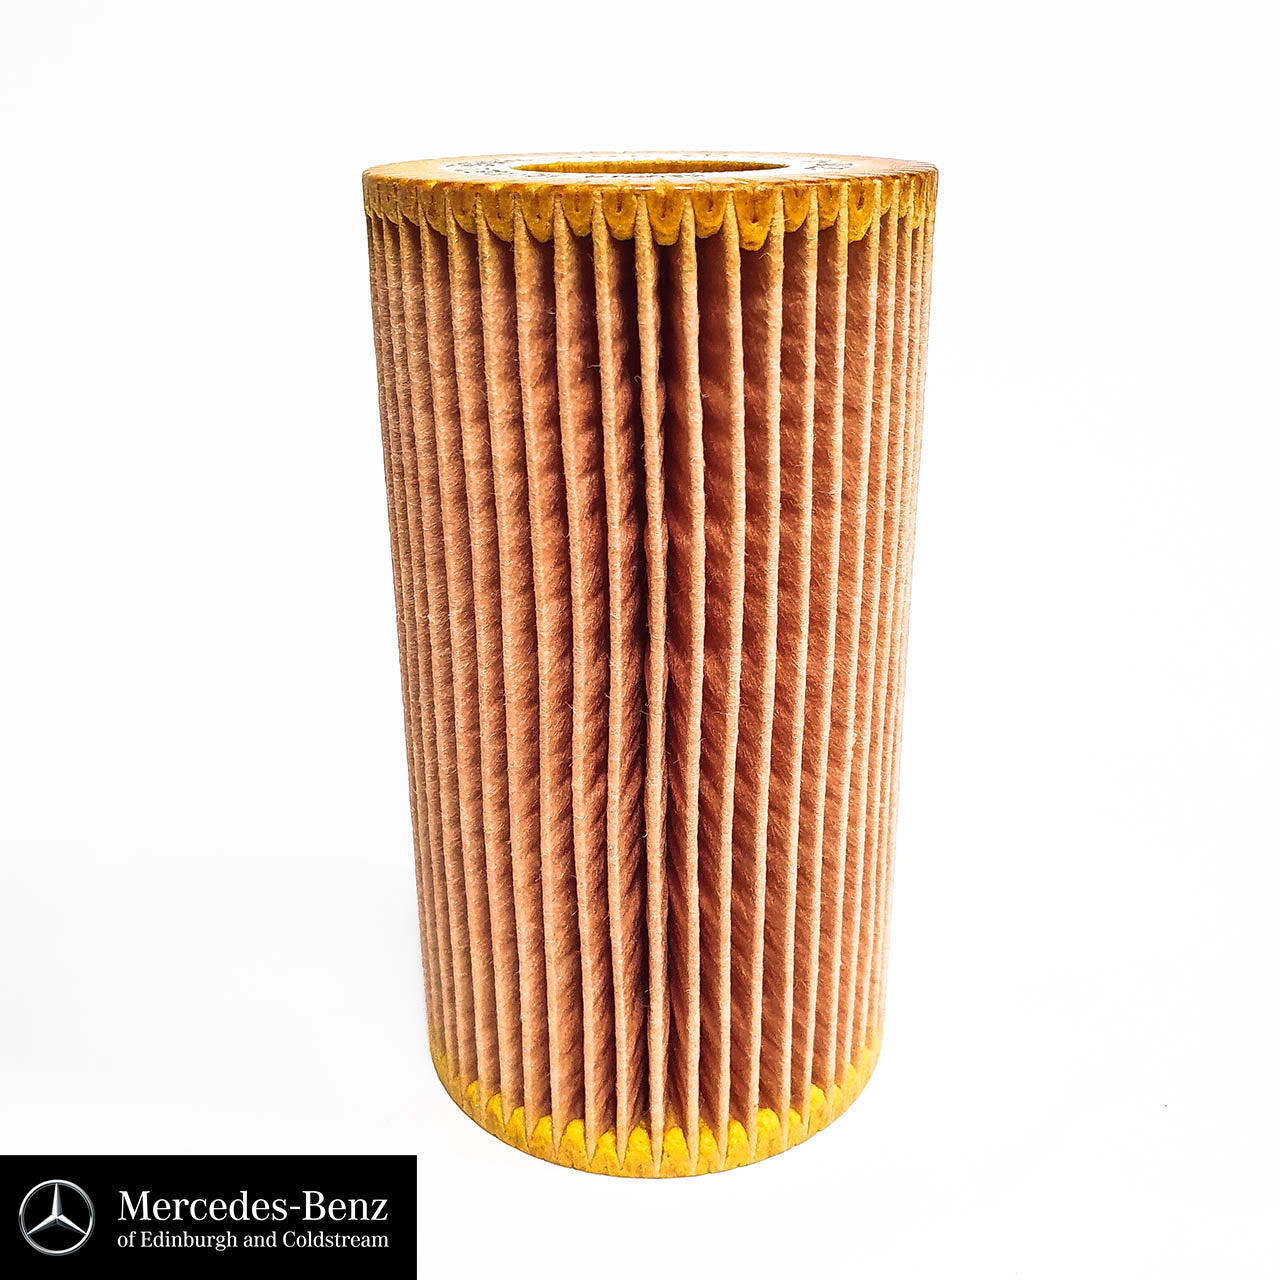 Genuine Mercedes-Benz oil filter for diesel engines